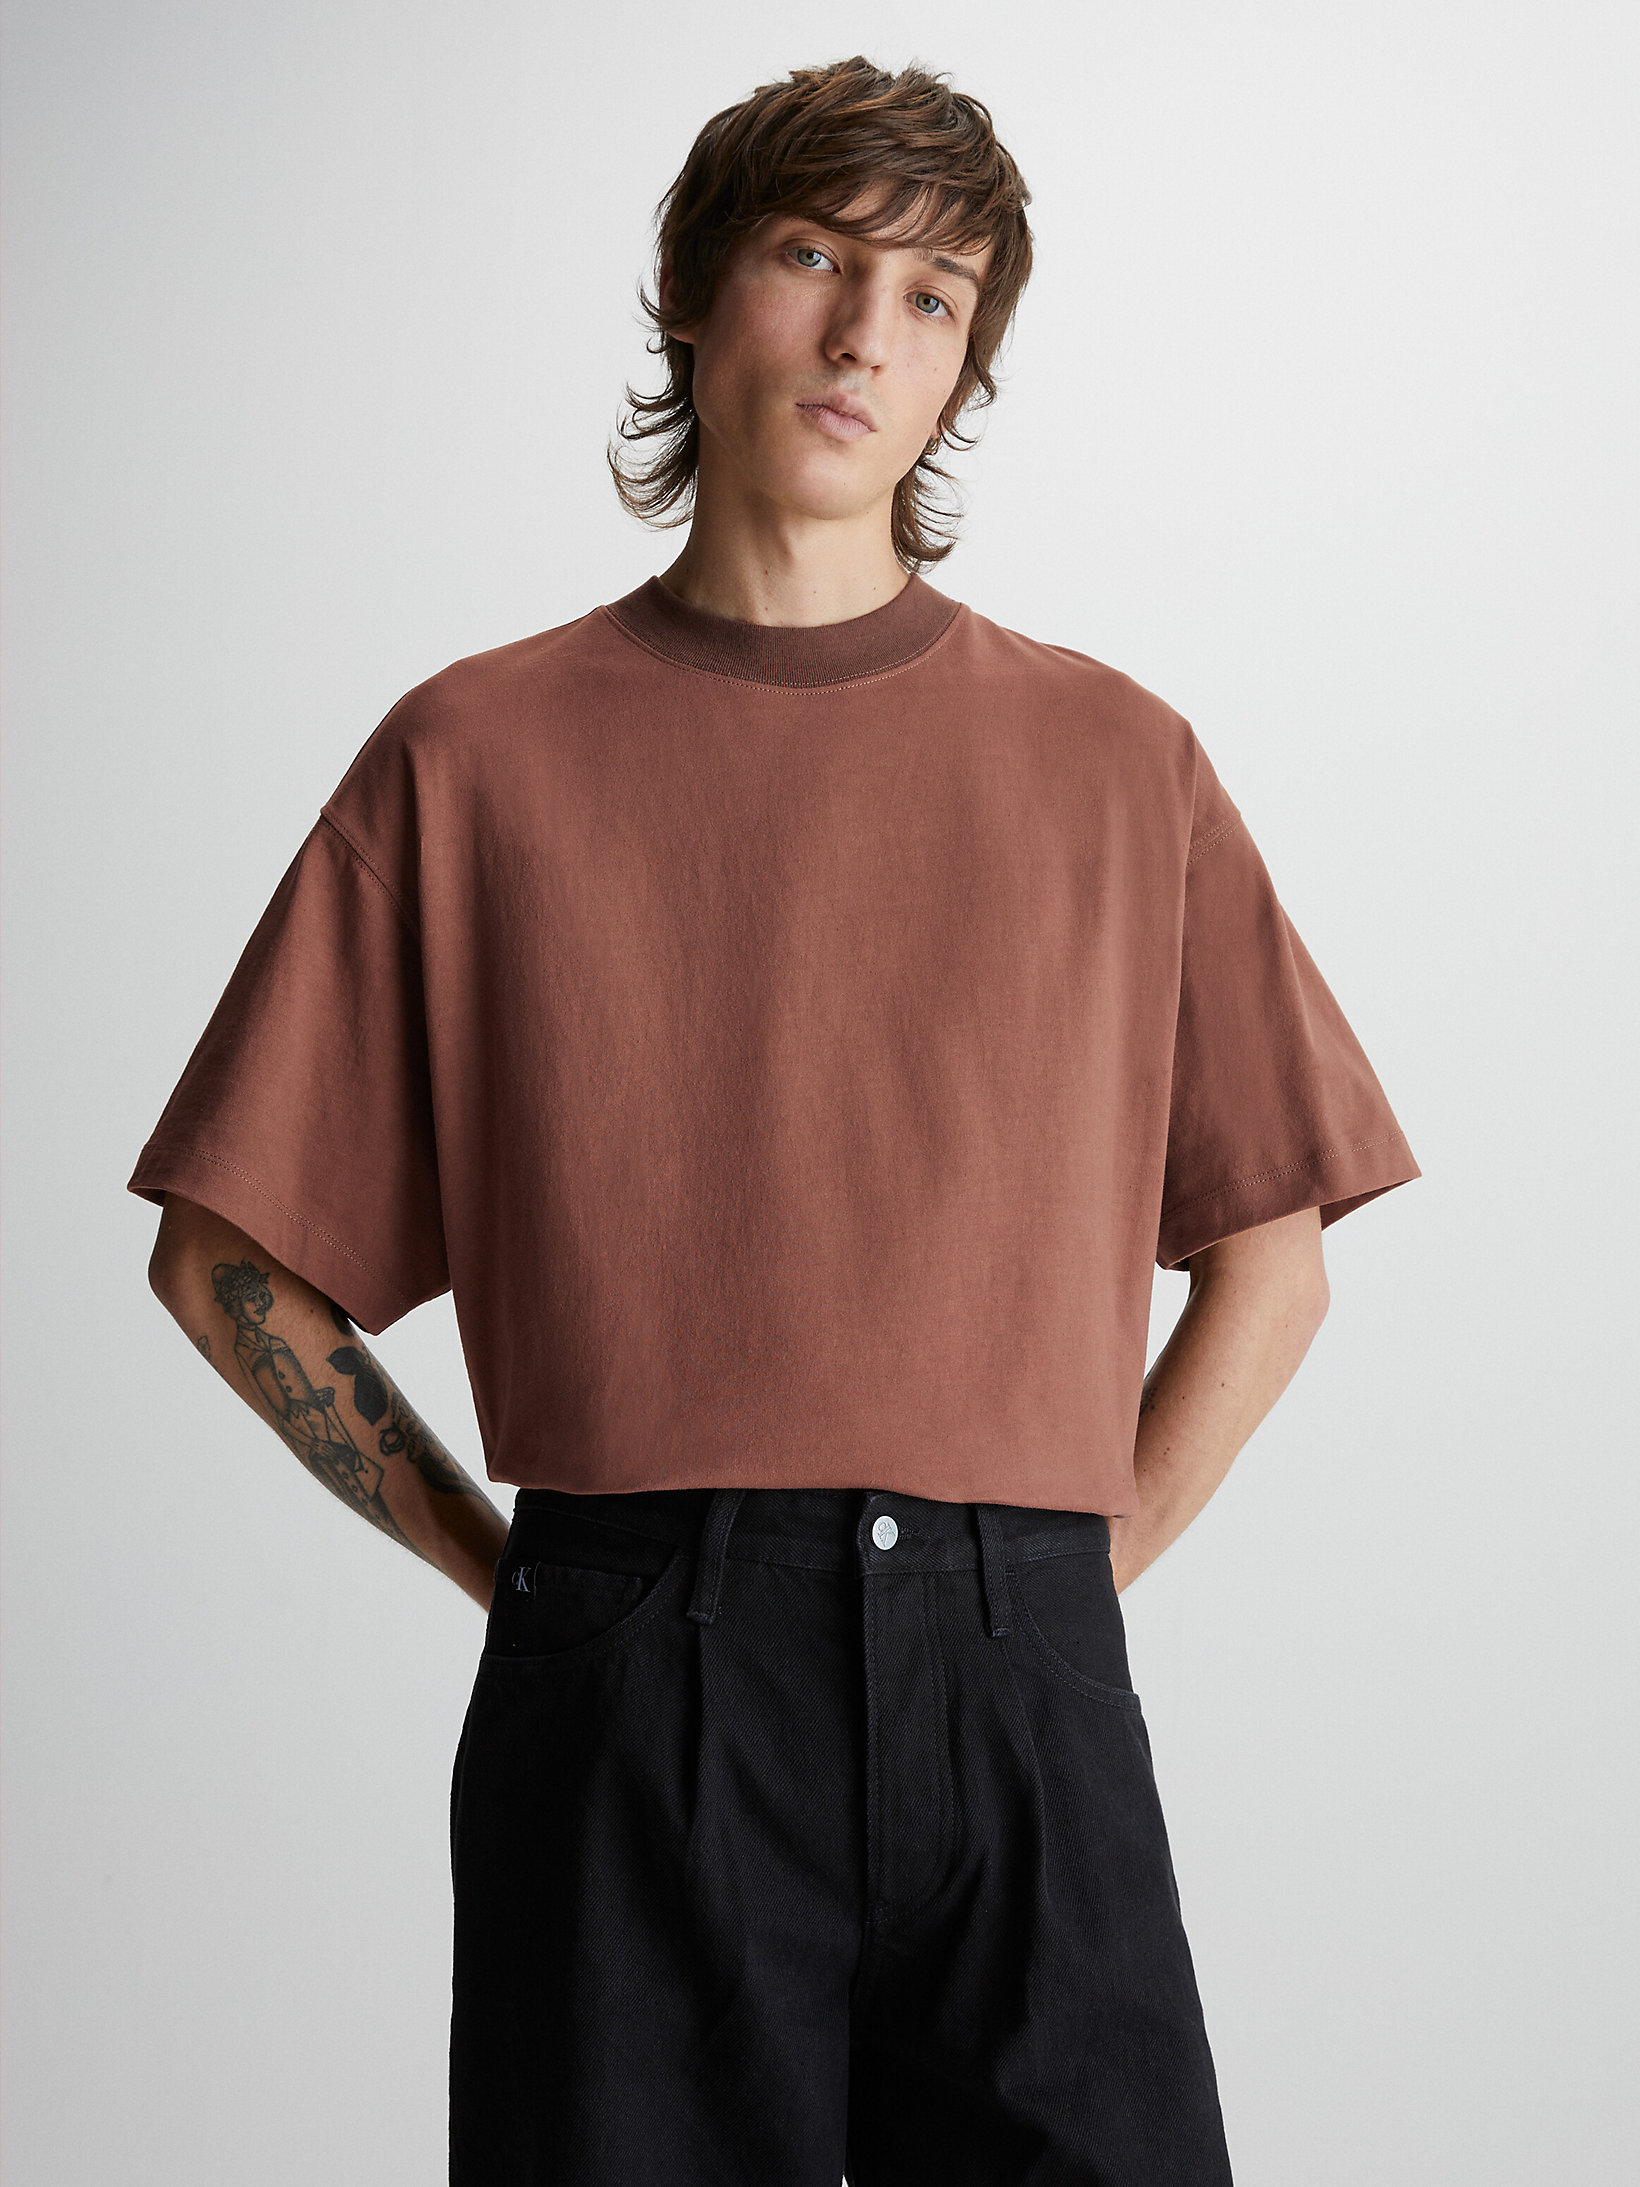 Camiseta Oversized Unisex > Pecan Nut > undefined unisex > Calvin Klein